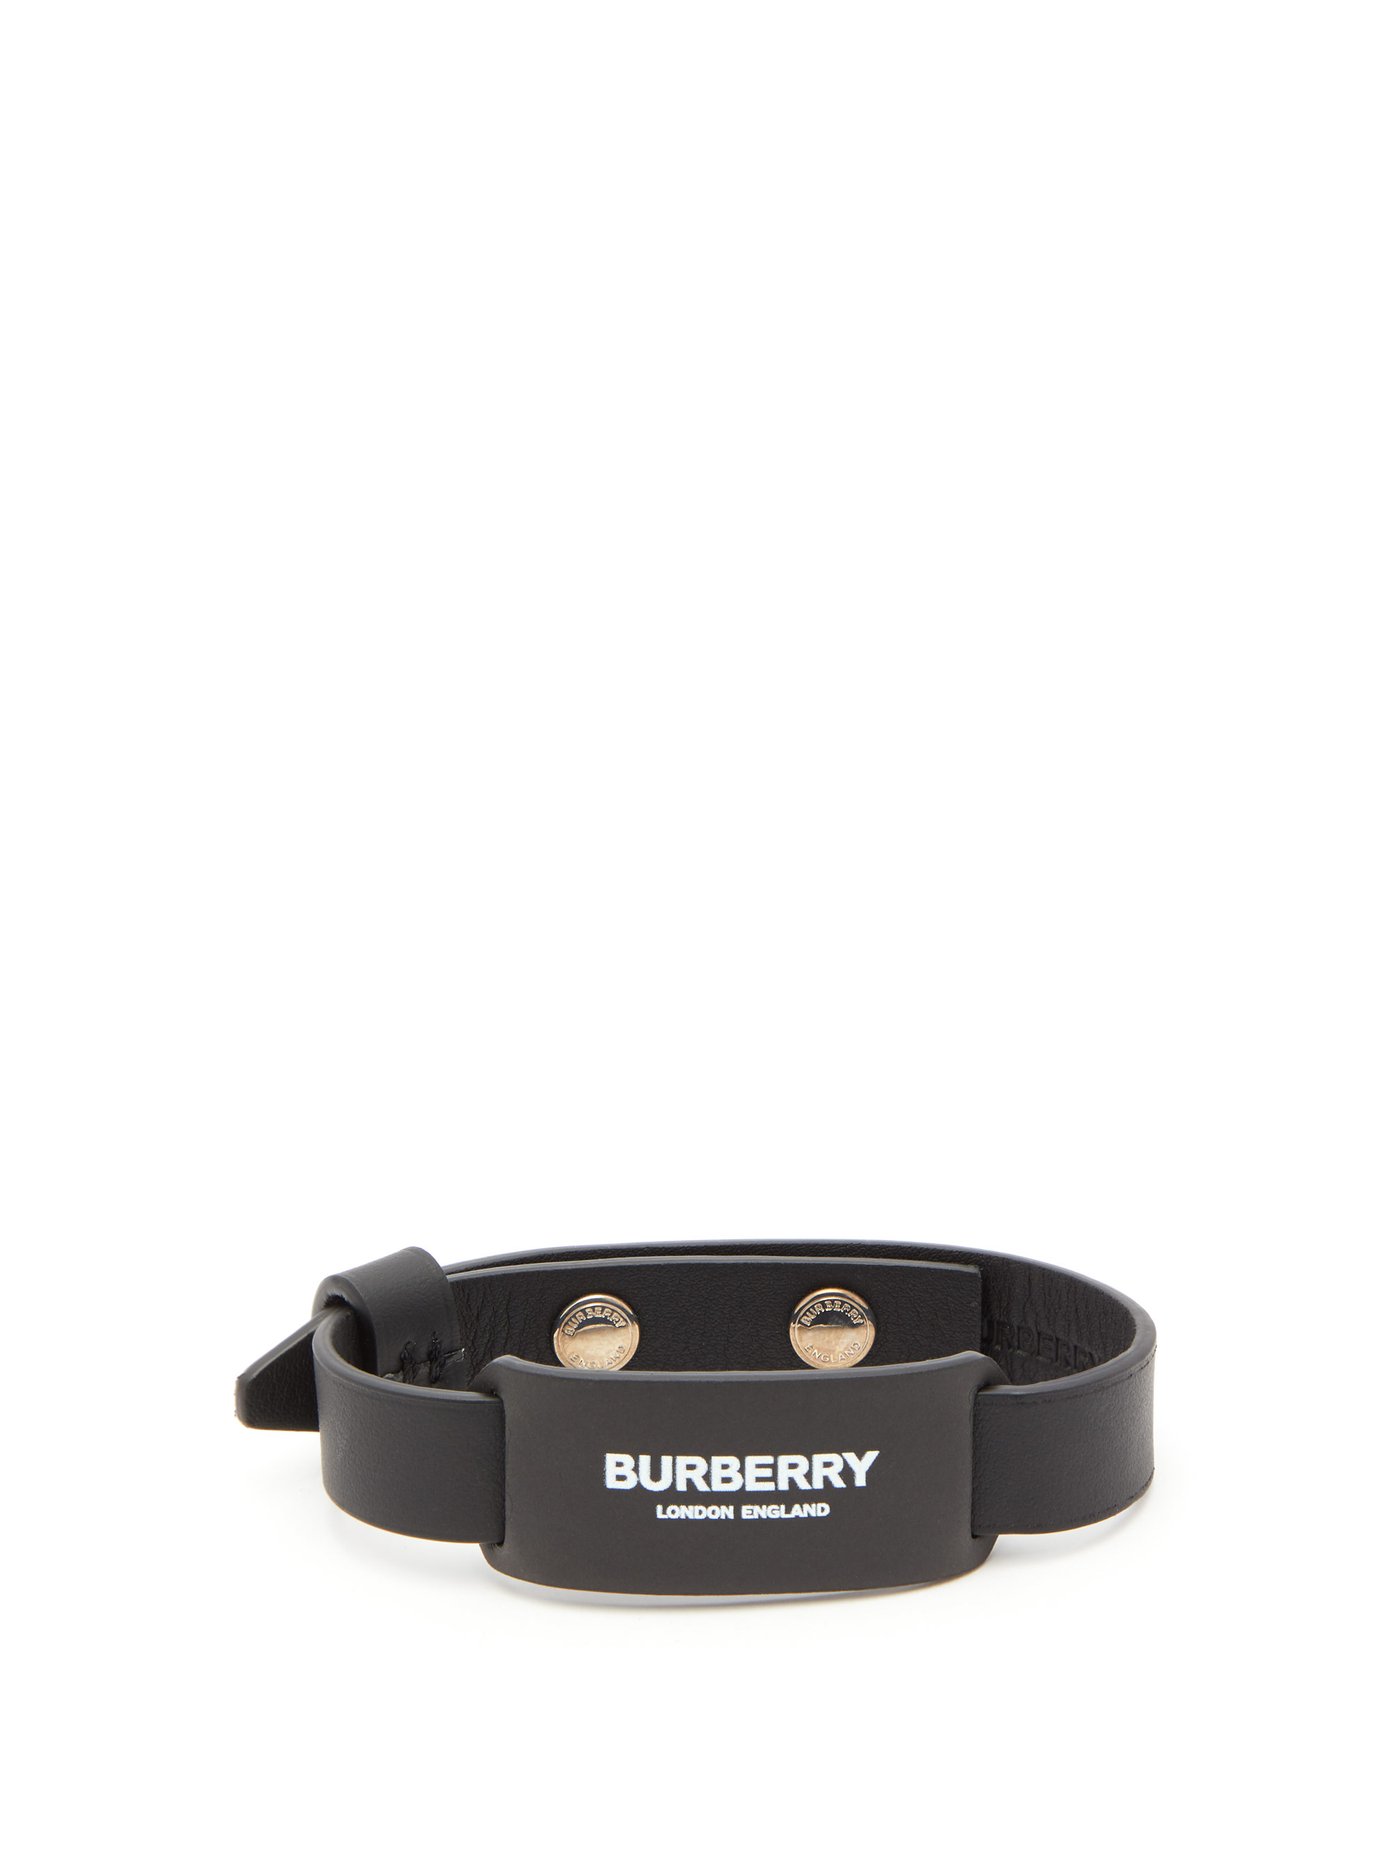 burberry dog collar uk